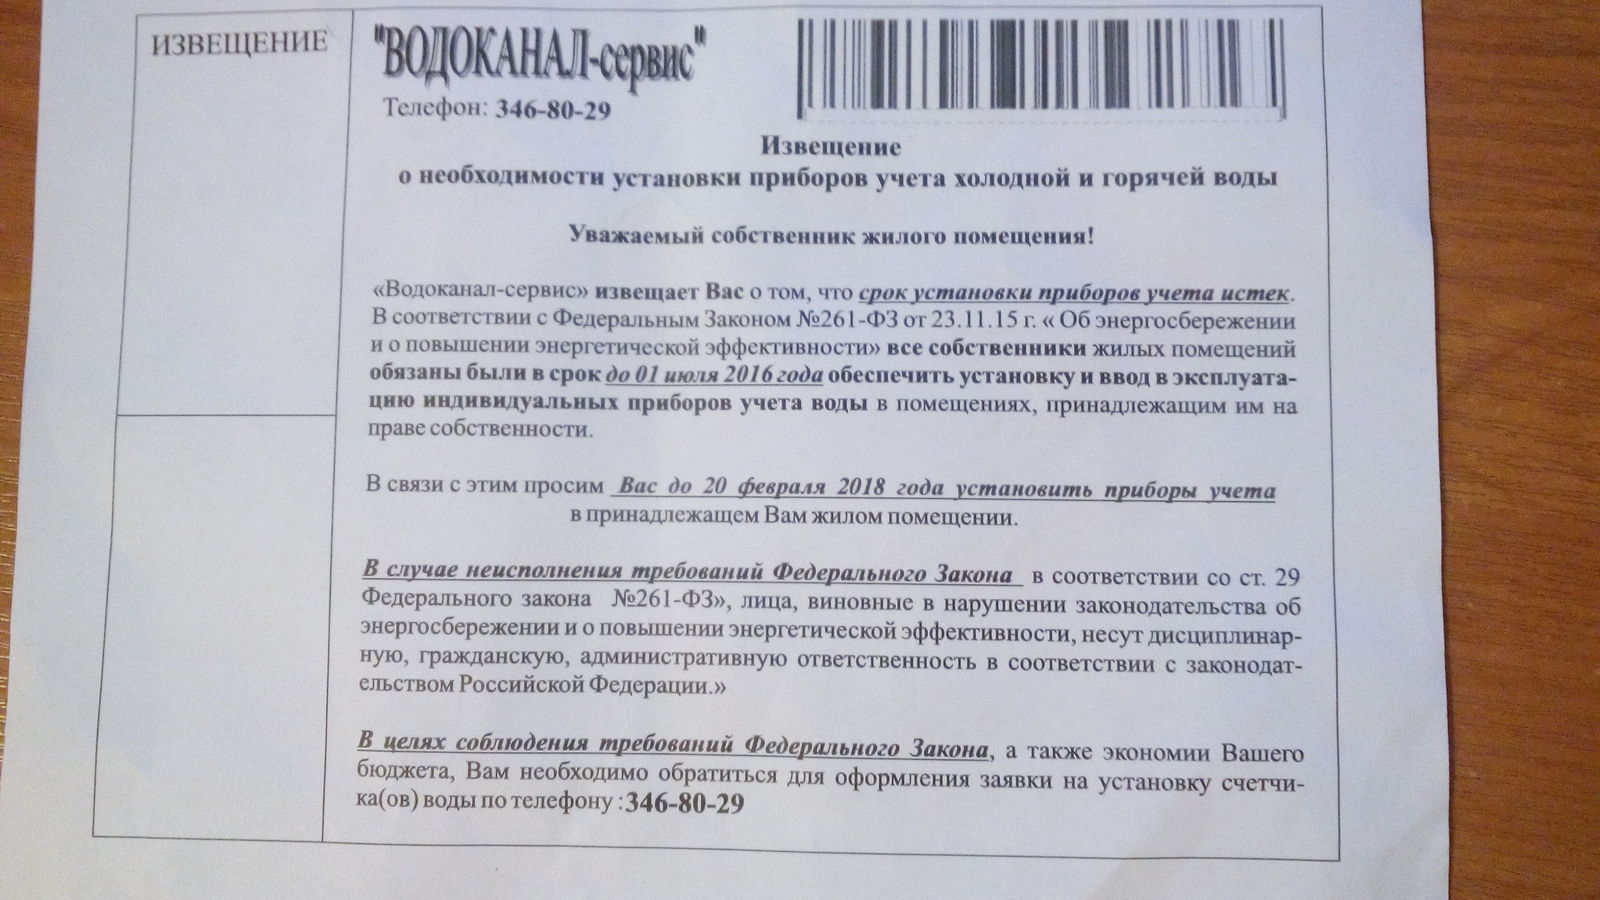 Vodokanal-service, Yekaterinburg - My, Fraud, Marketing, Vodokanal, Yekaterinburg, Exposure